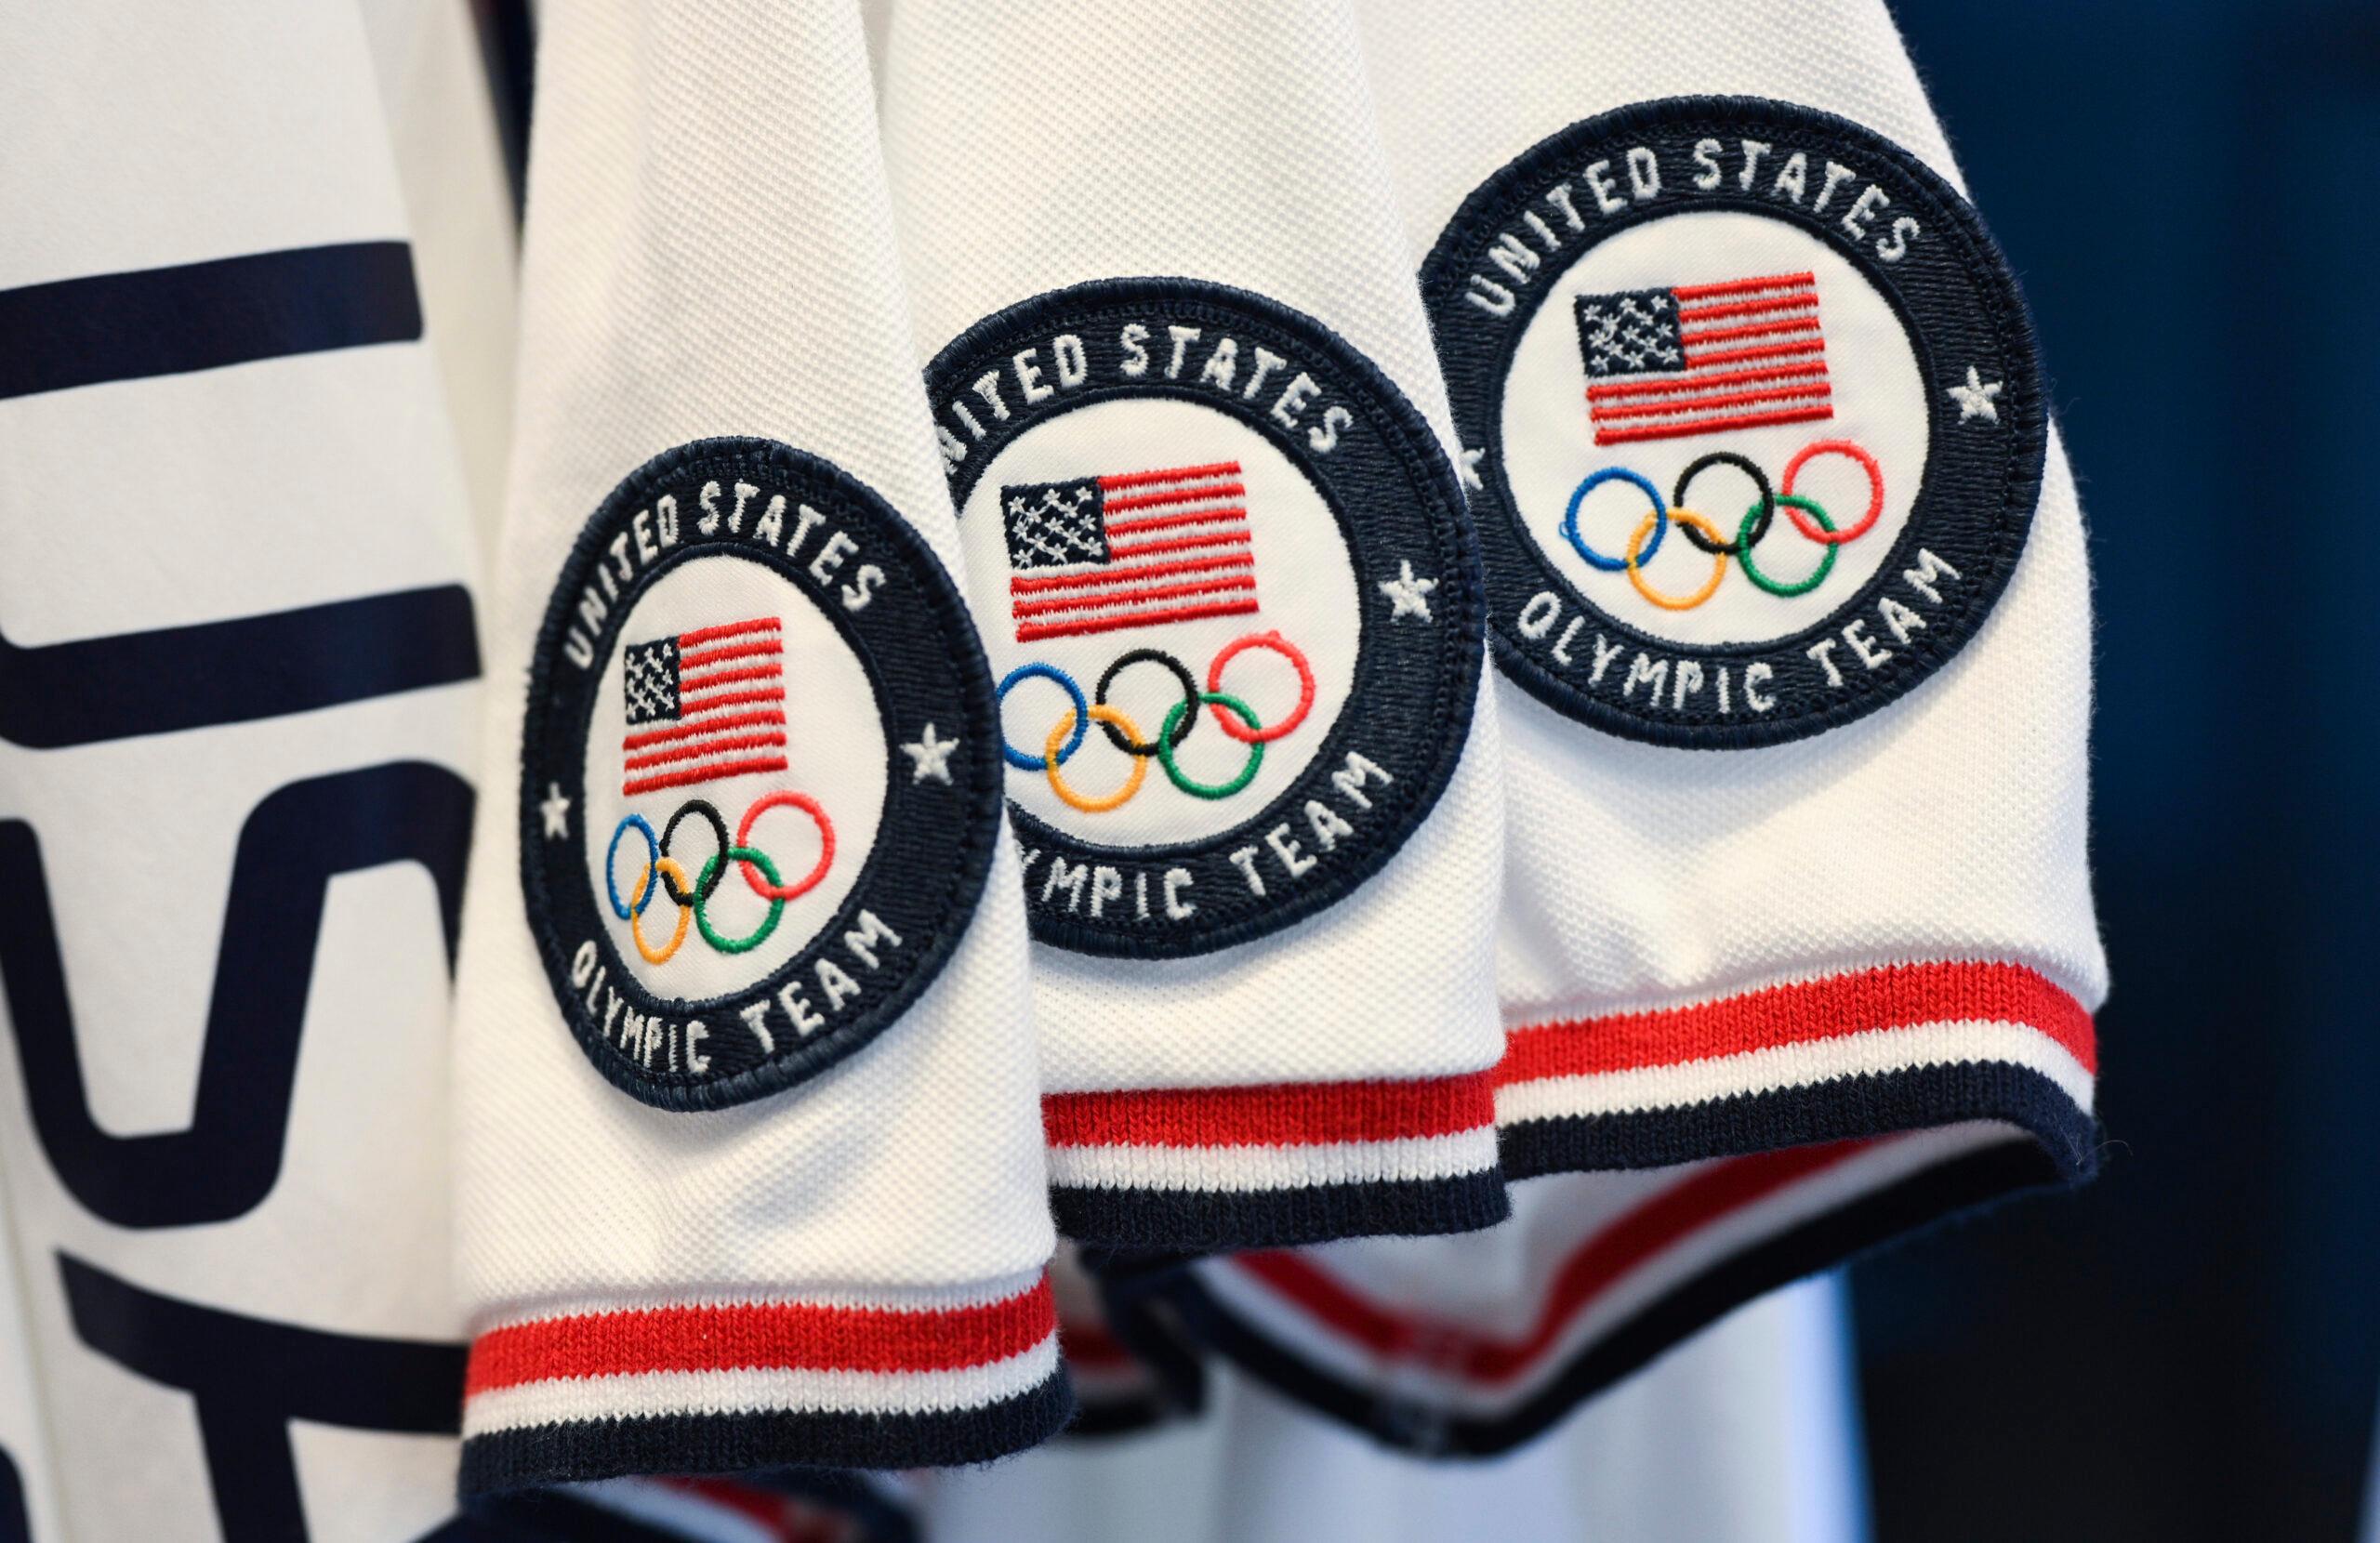 Ralph Lauren/Team USA Closing Ceremony Uniform Unveiling